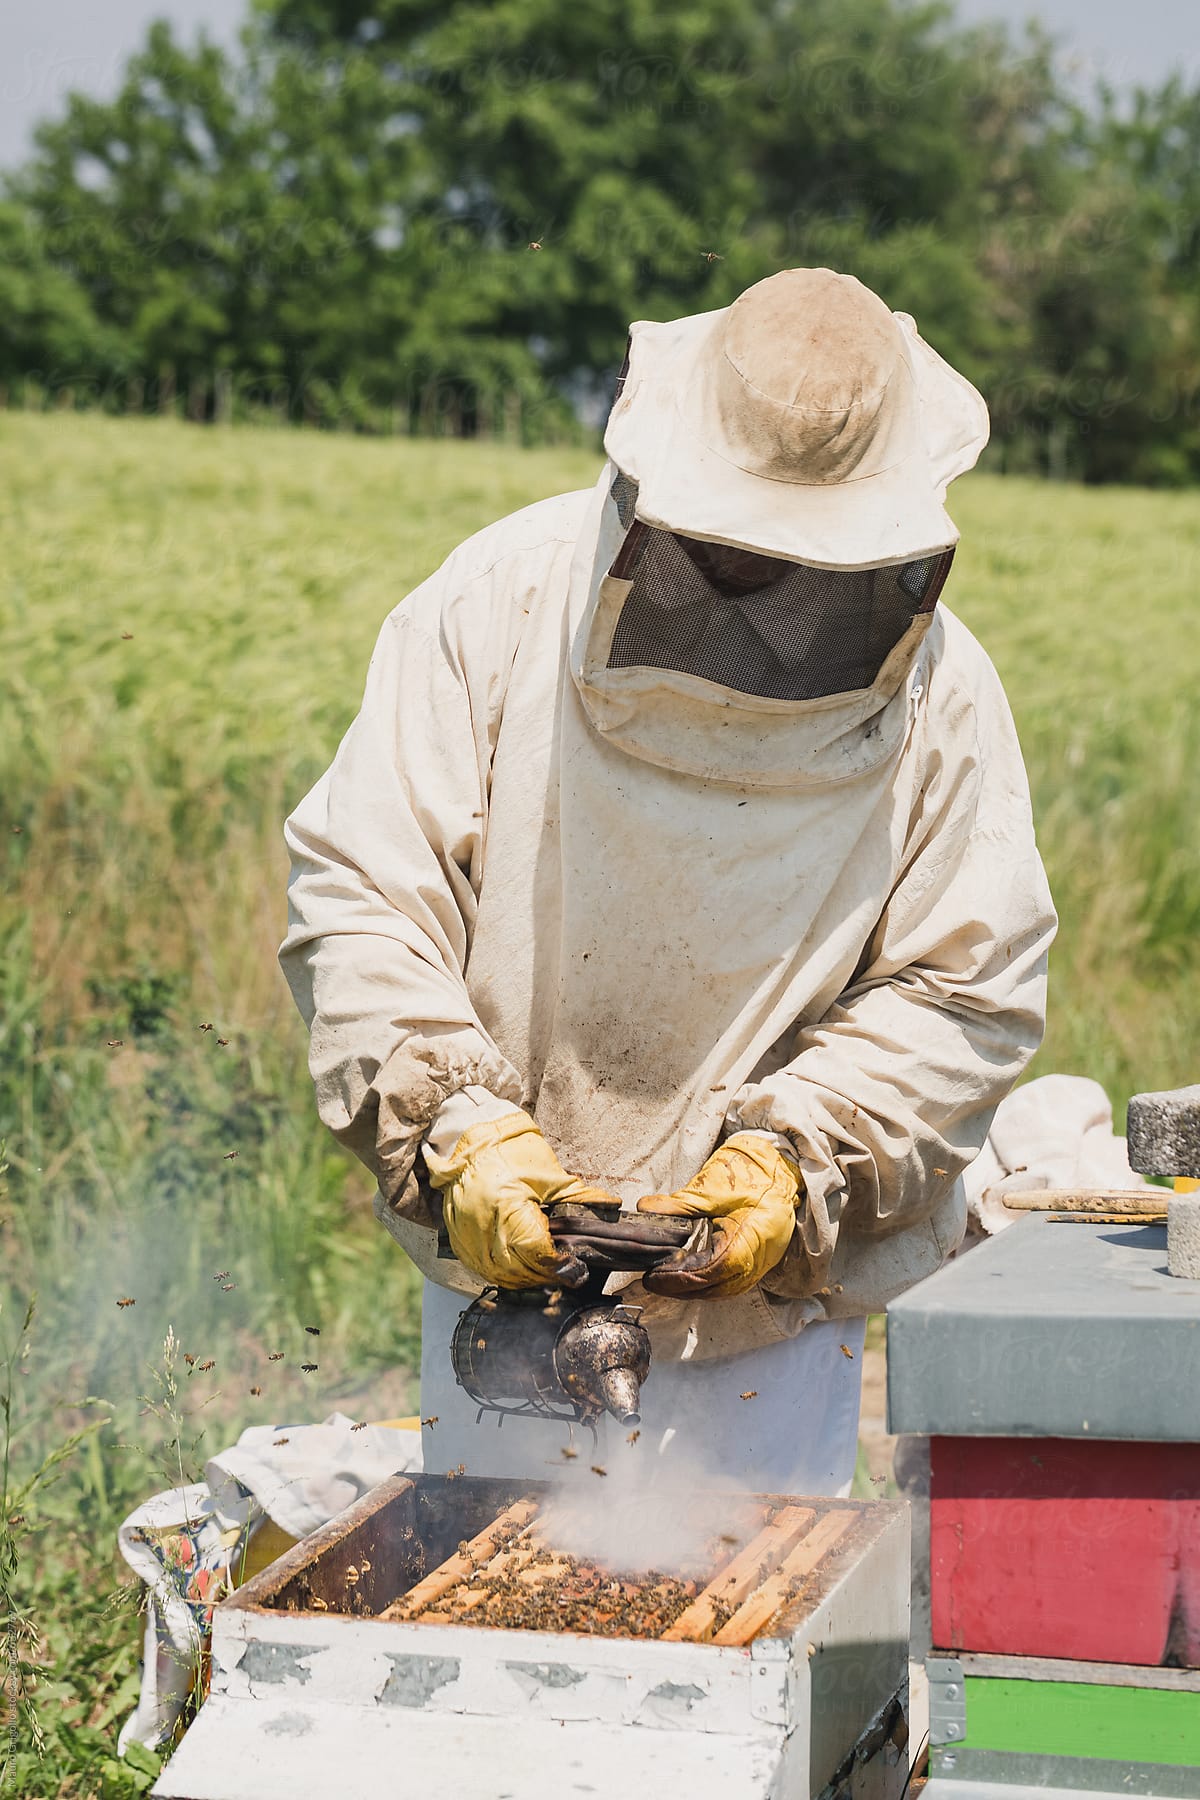 Beekeeper Calming Bees With Smoke By Stocksy Contributor Mauro Grigollo Stocksy